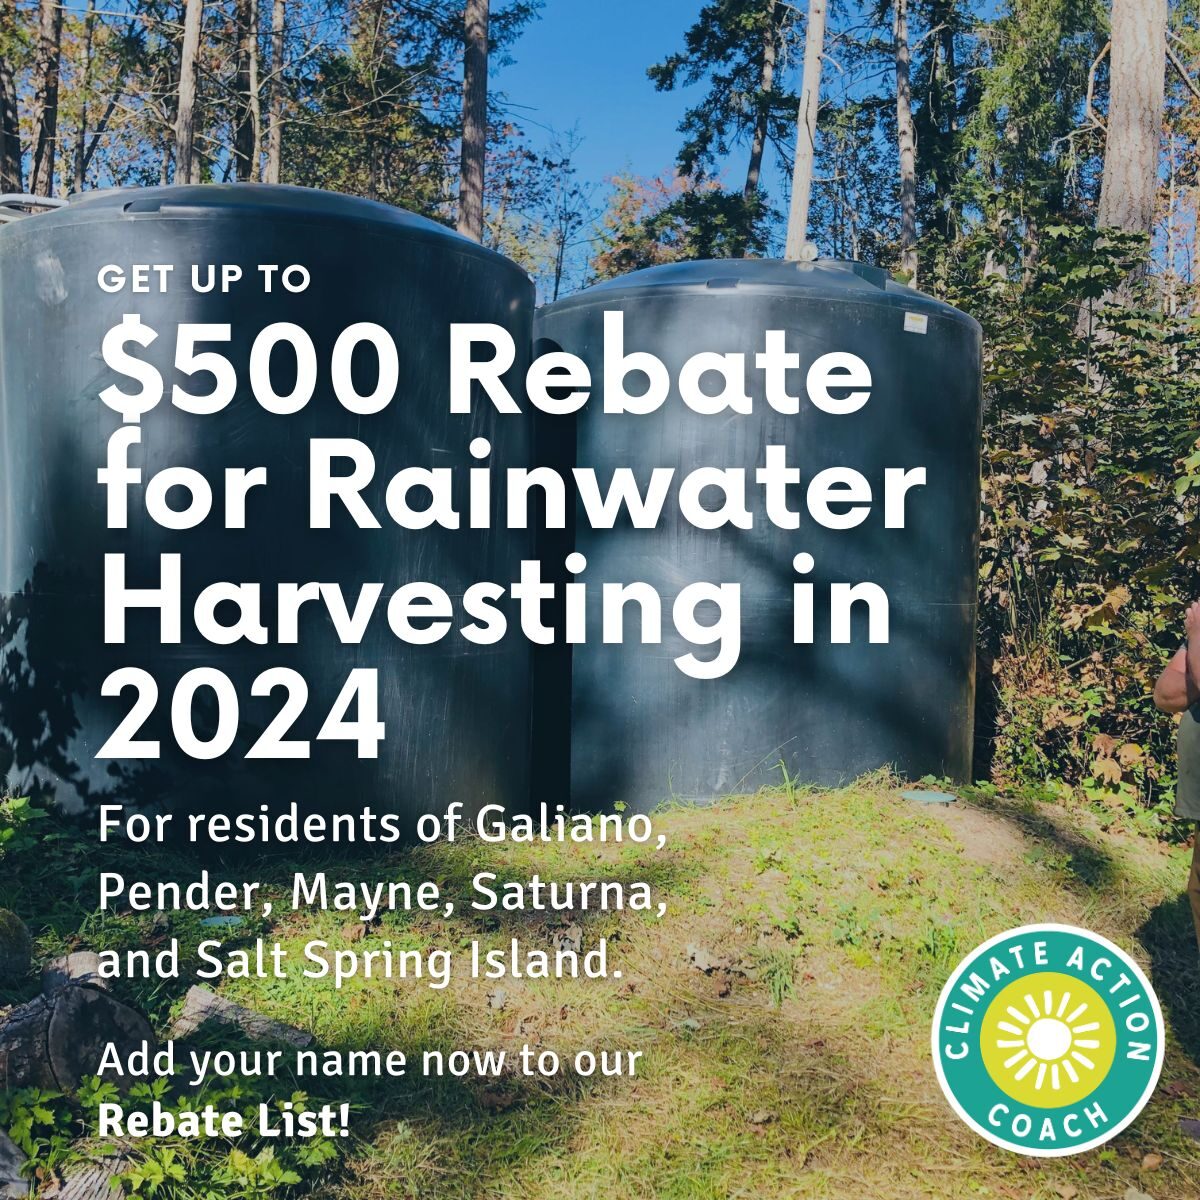 RainwaterHarvesting Rebate - SQUARE post (1200 × 1200 px) - August 2022 (3)